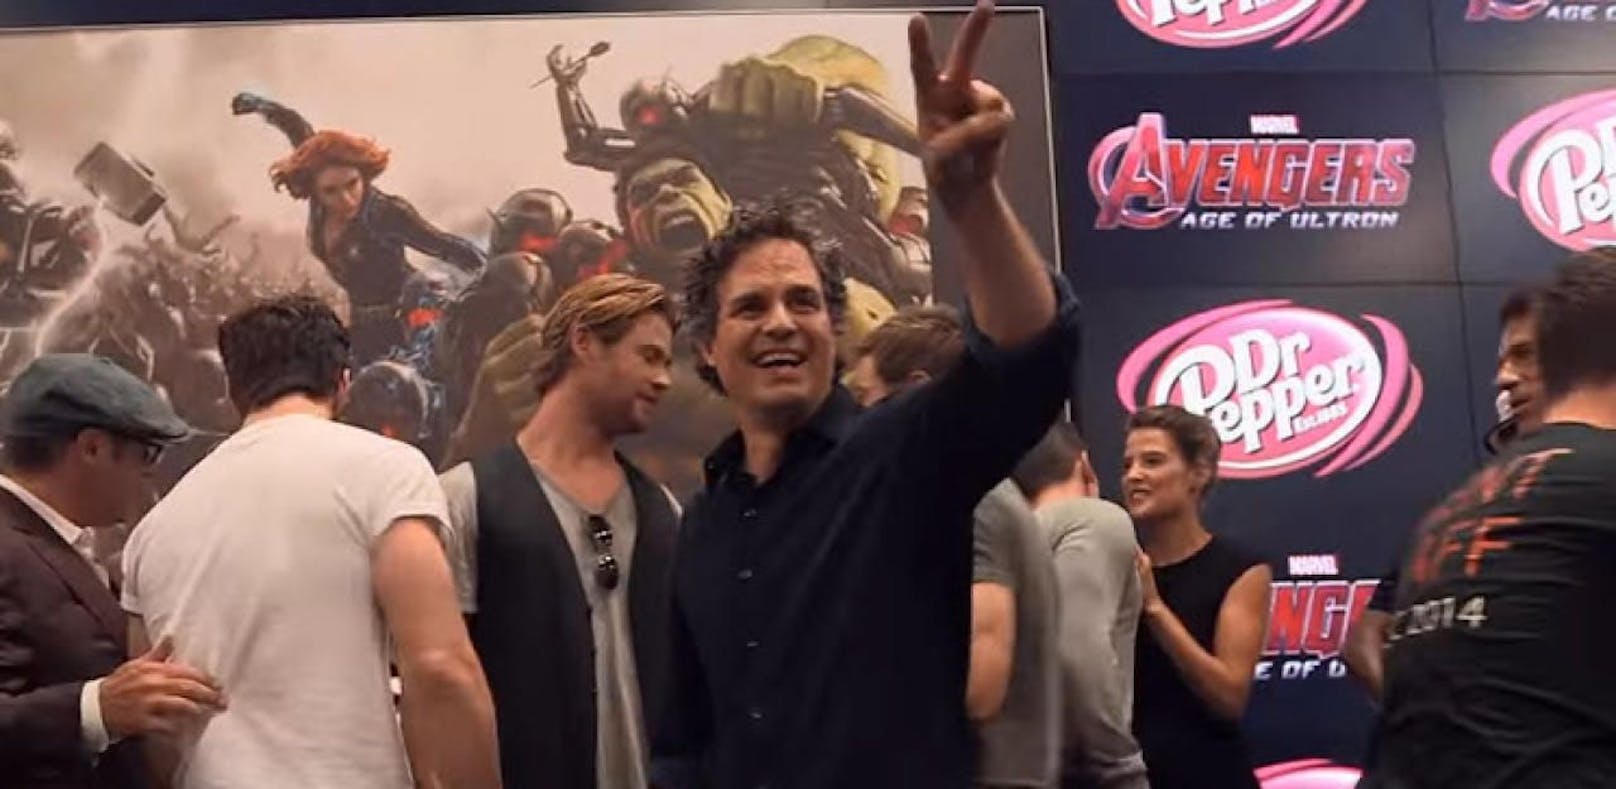 Die Avengers bedanken sich per Video bei den Fans